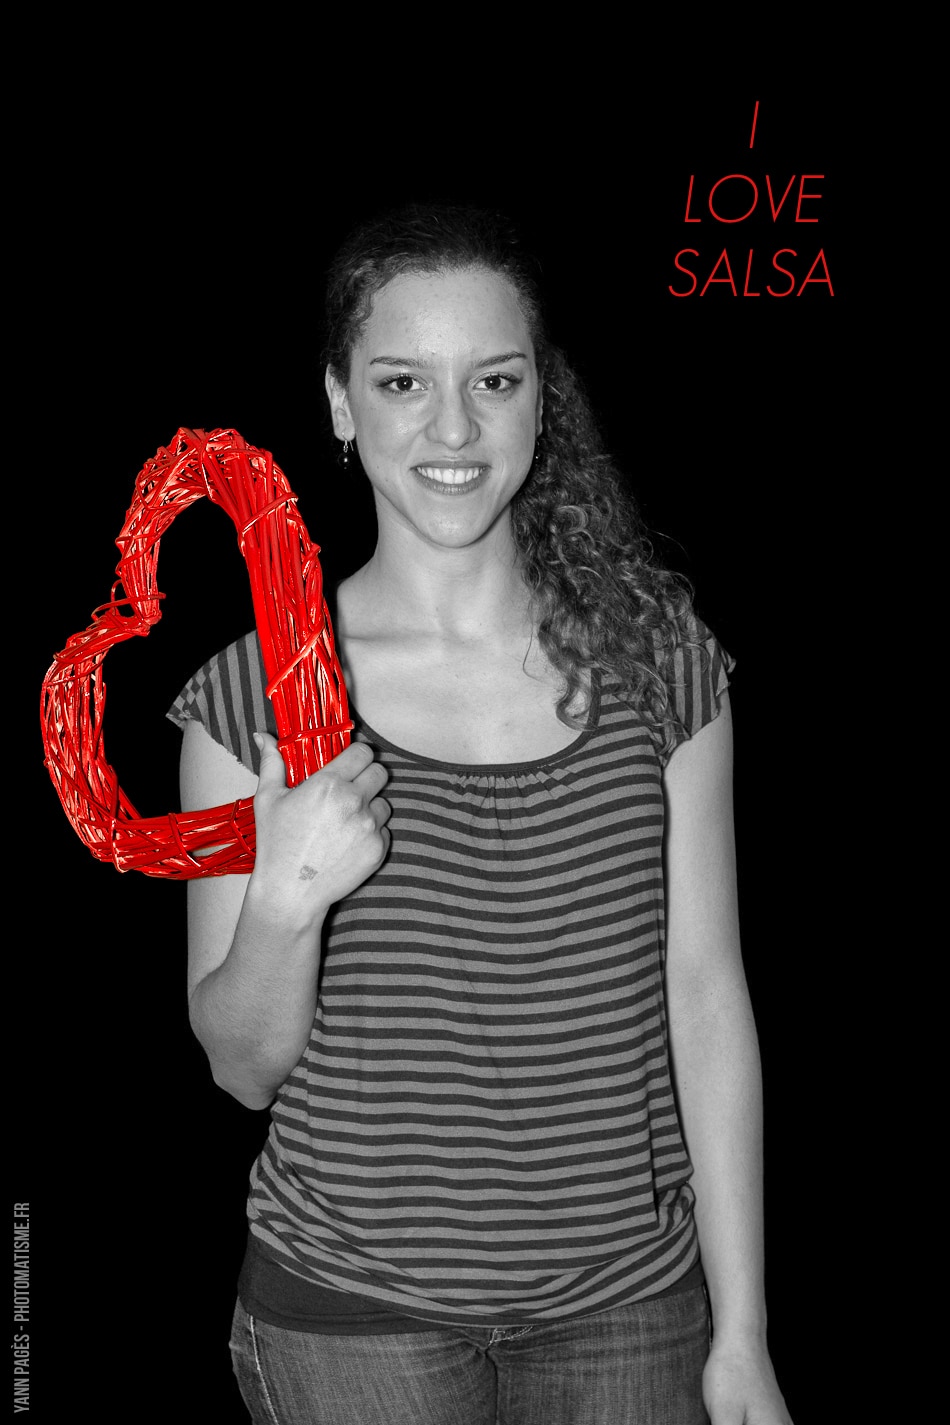 We love salsa